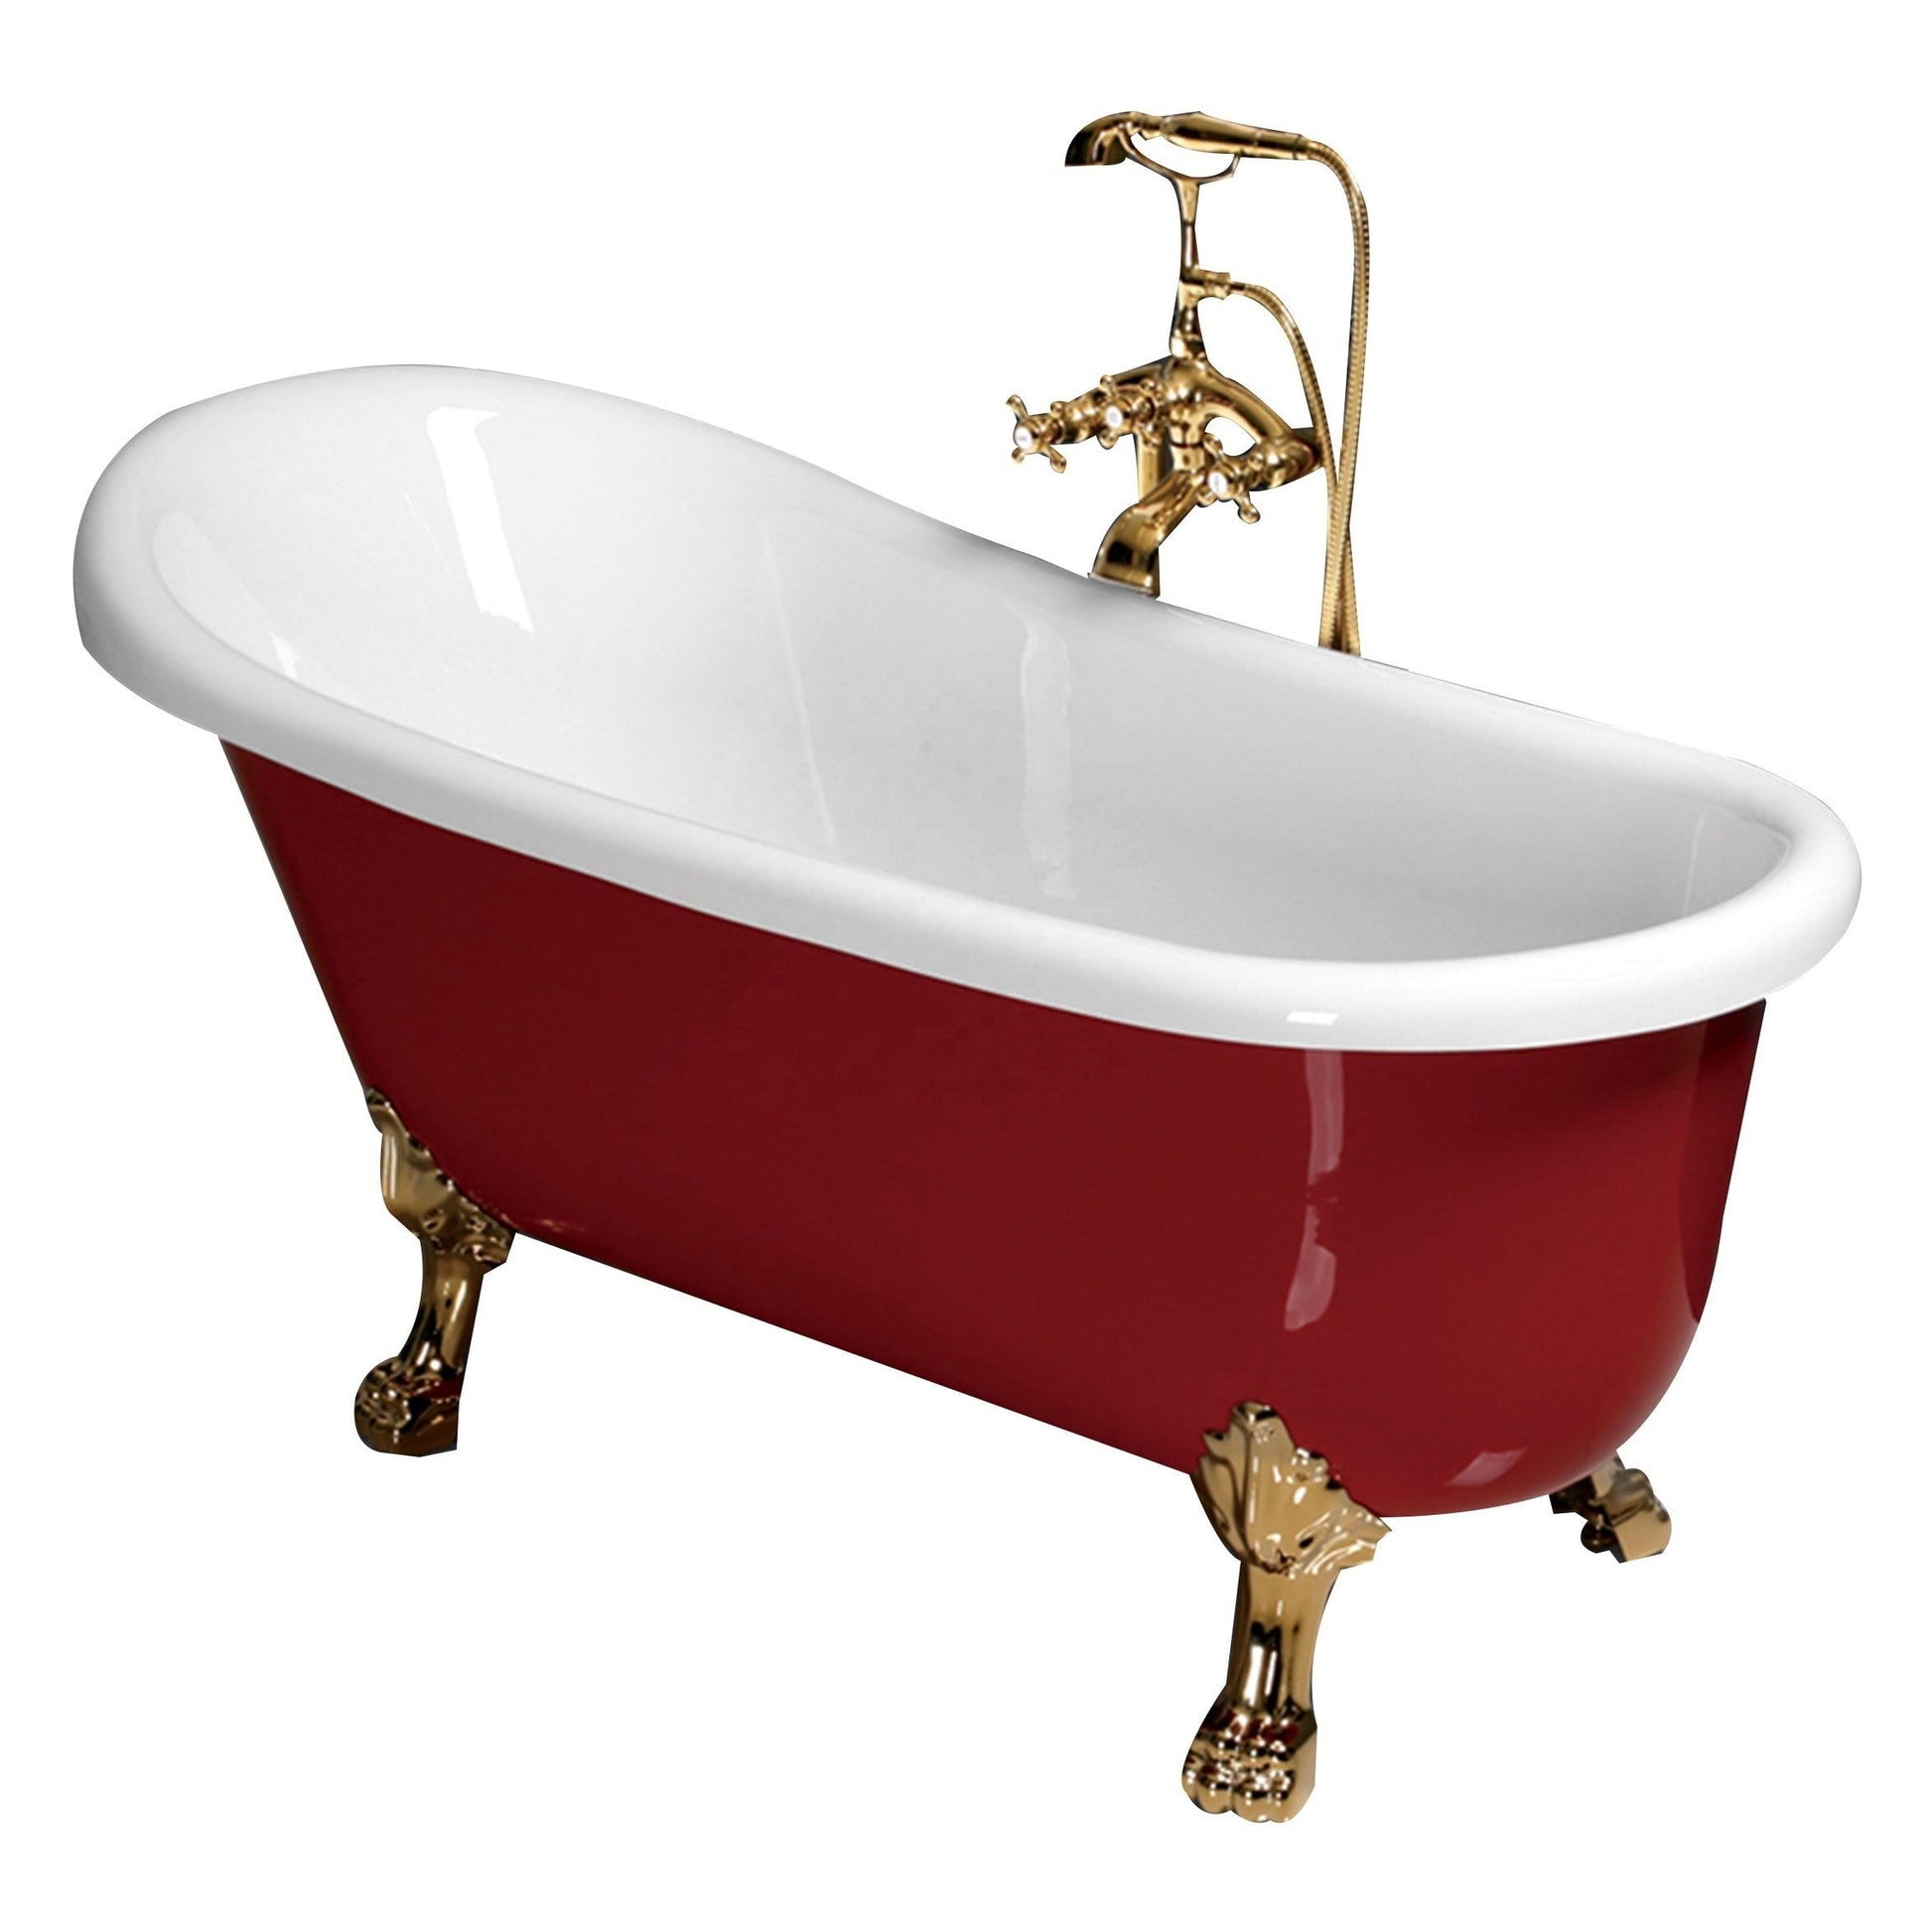 Fontana Sierra 59" x 28" Single Slipper Red Oval Luxury Freestanding Indoor Soaking Acrylic Bathtub